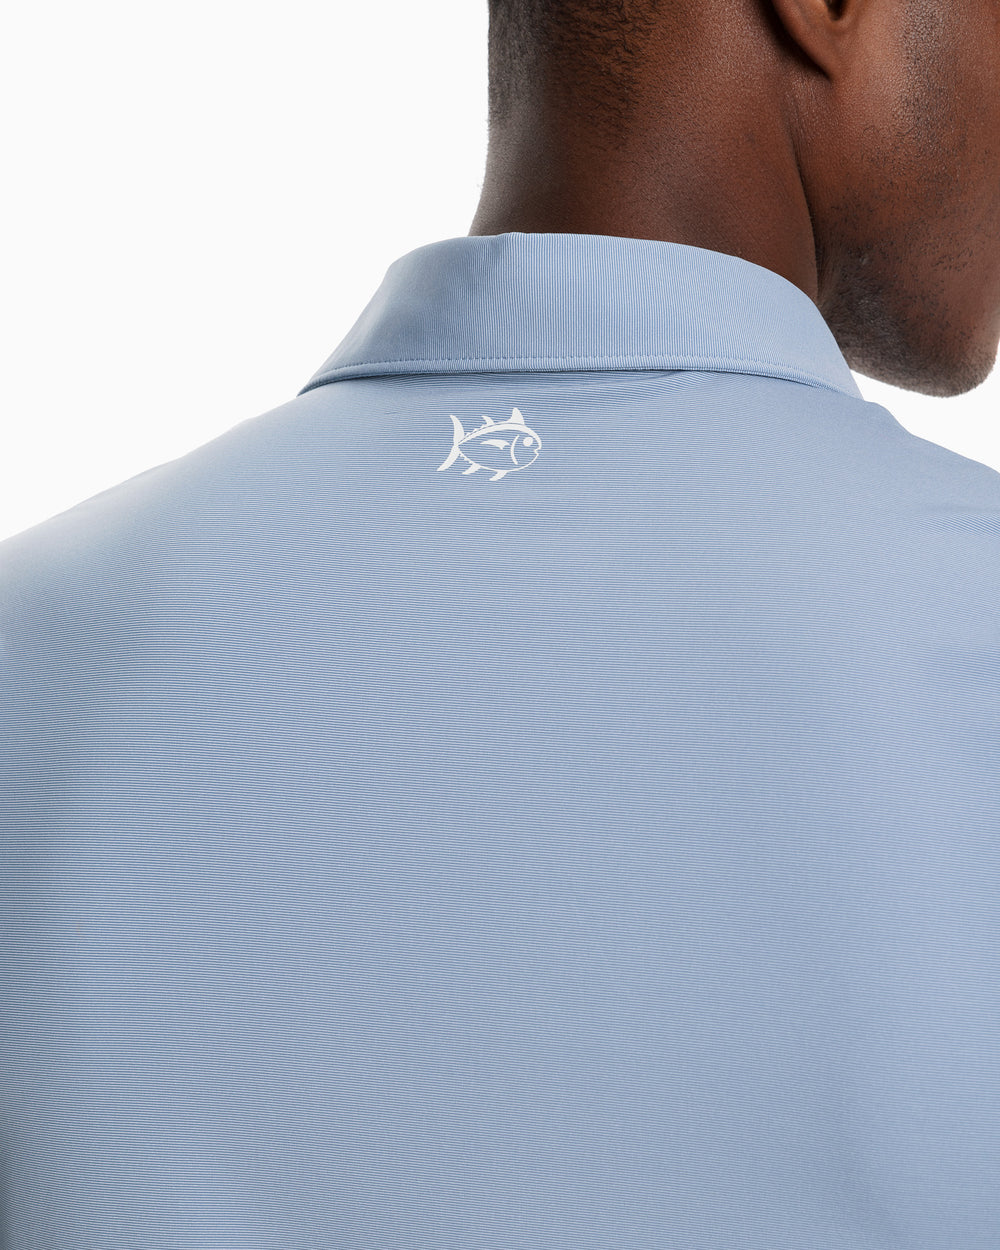 The model yoke view of the Men's Sawgrass Stripe brrr°®-eeze Performance Polo Shirt by Southern Tide - Blue Ridge